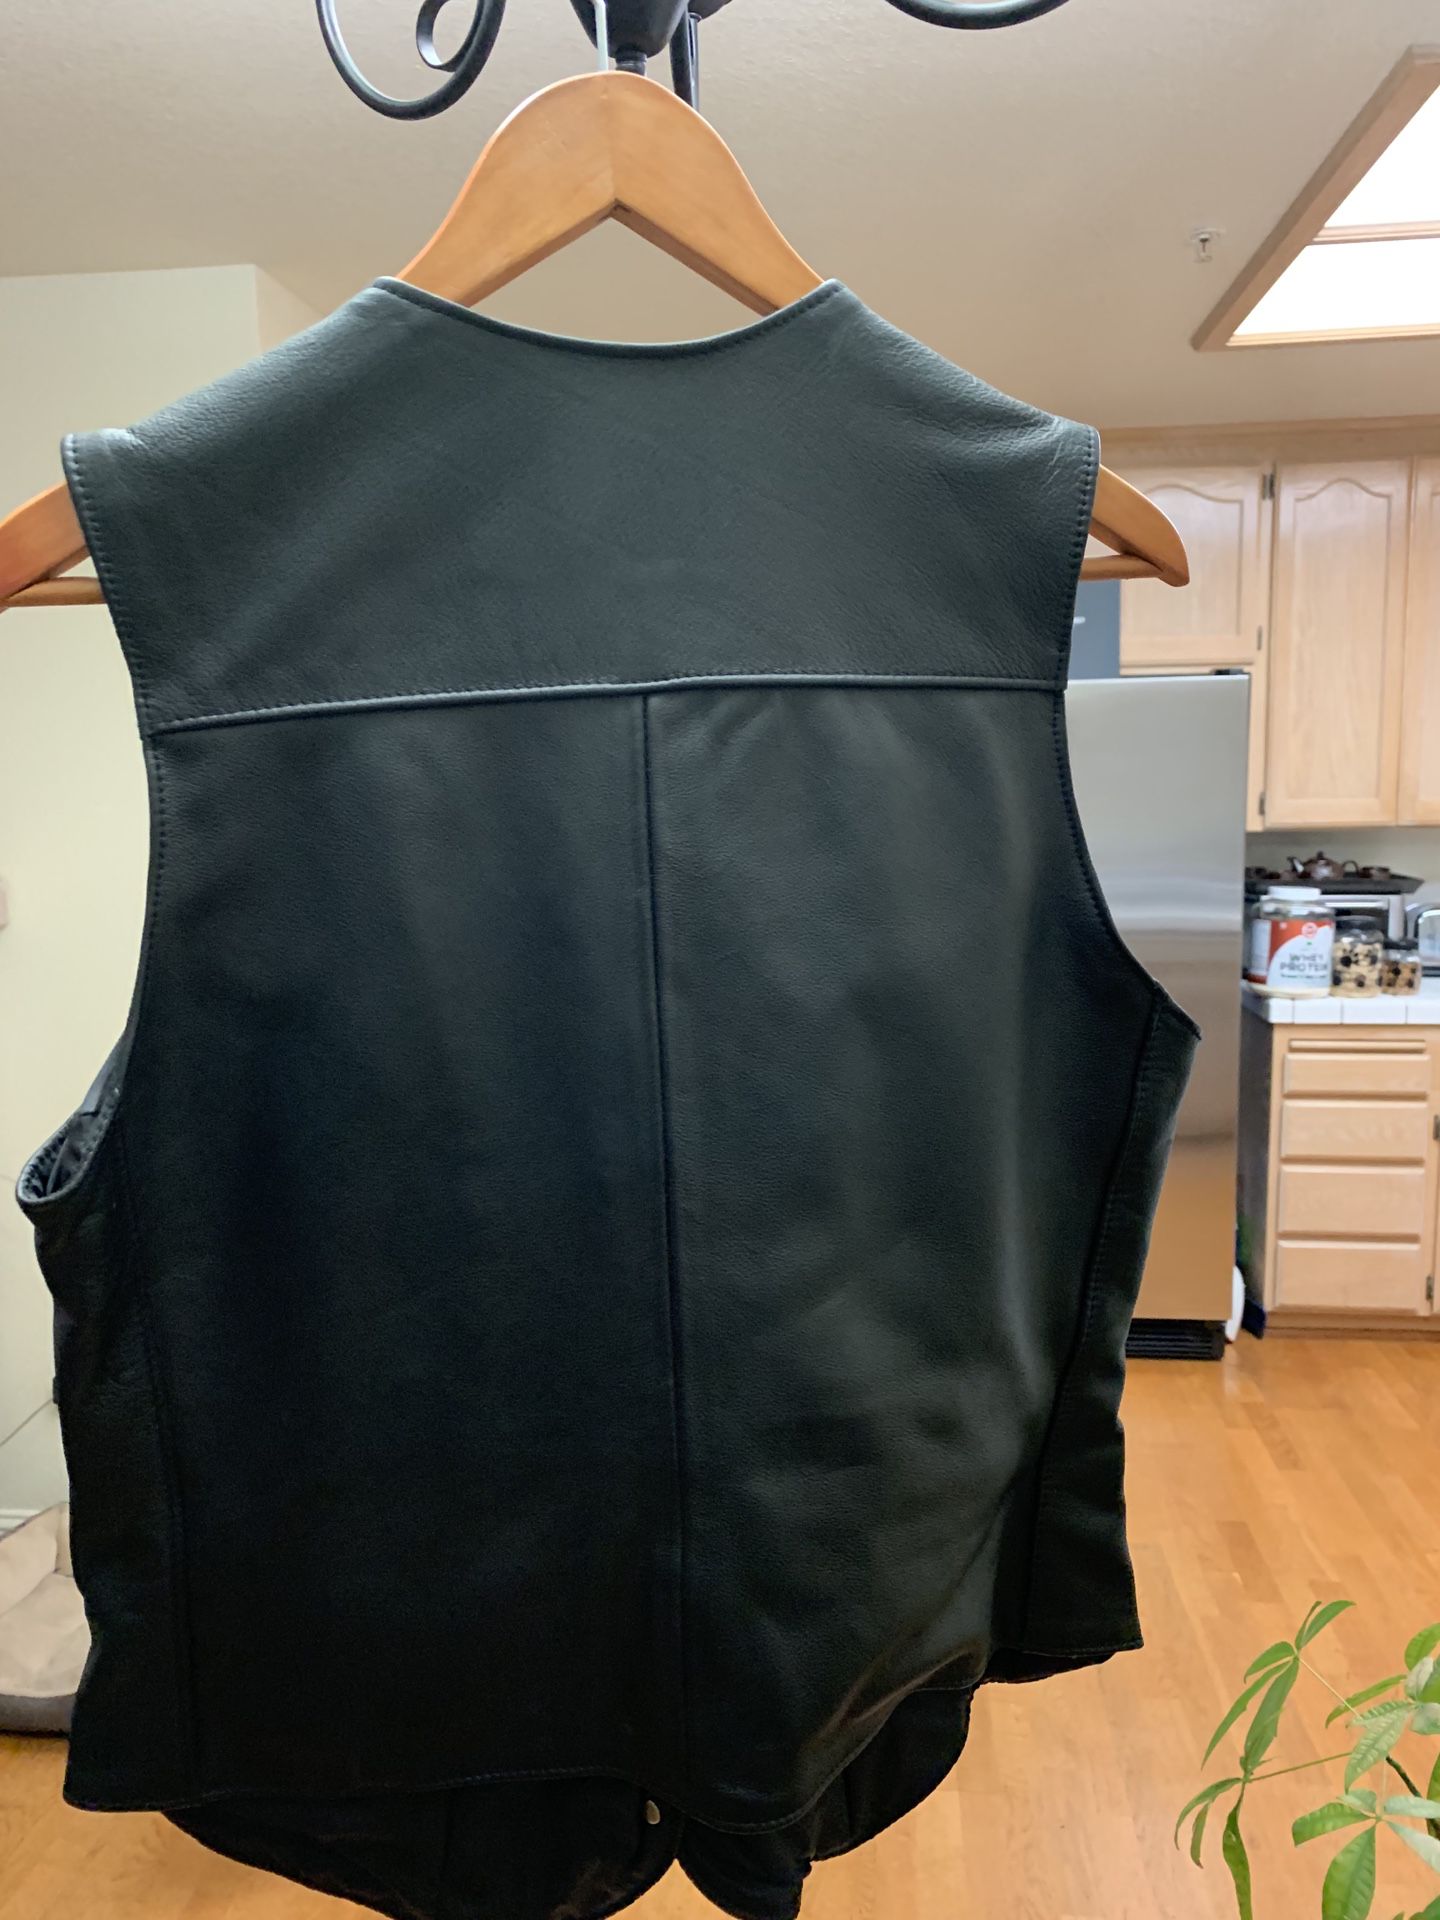 Women’s Harley-Davidson leather vest size Large